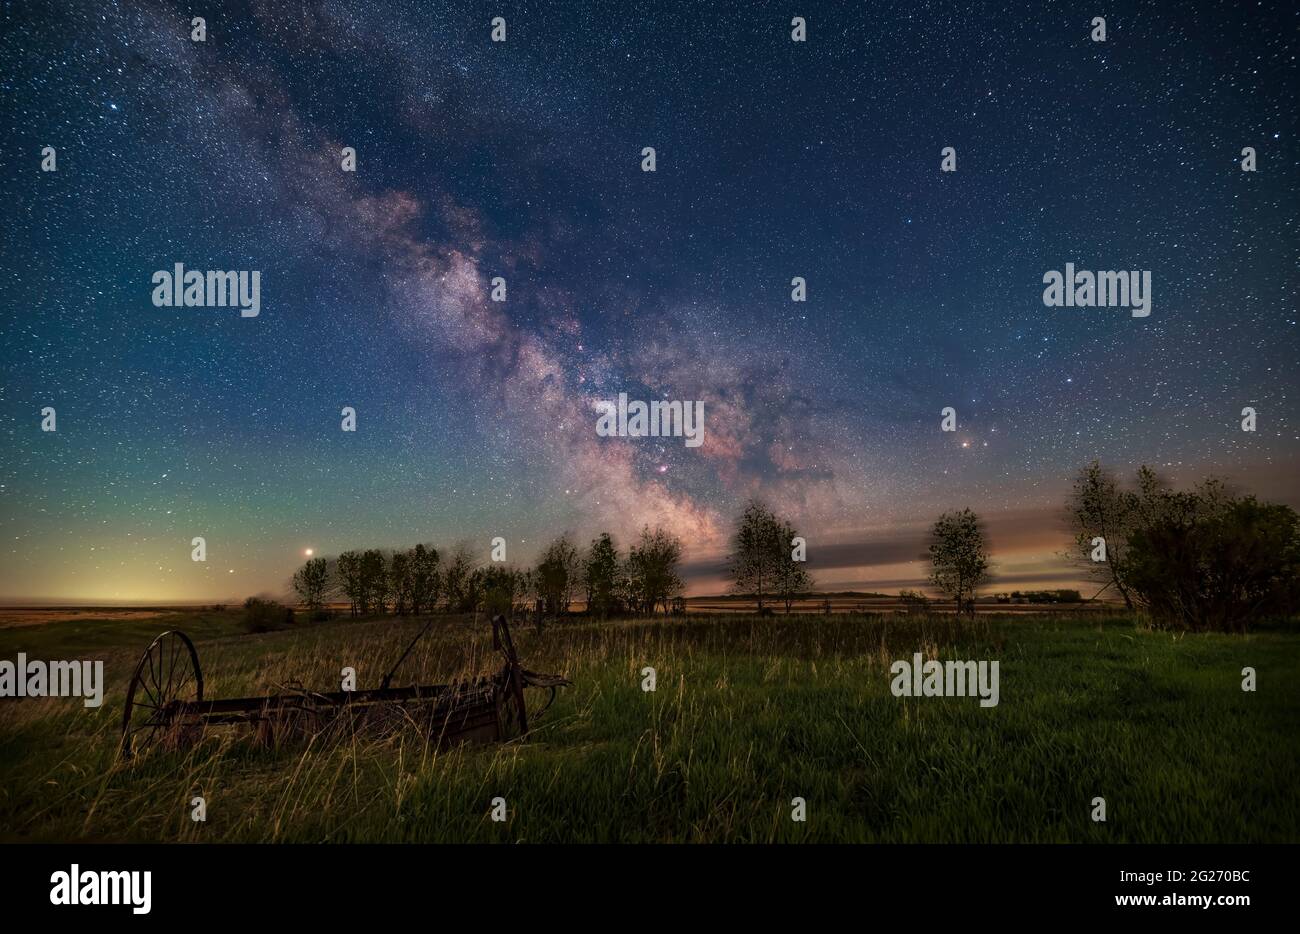 Backyard Milky Way with Jupiter and Saturn rising, Alberta, Canada. Stock Photo